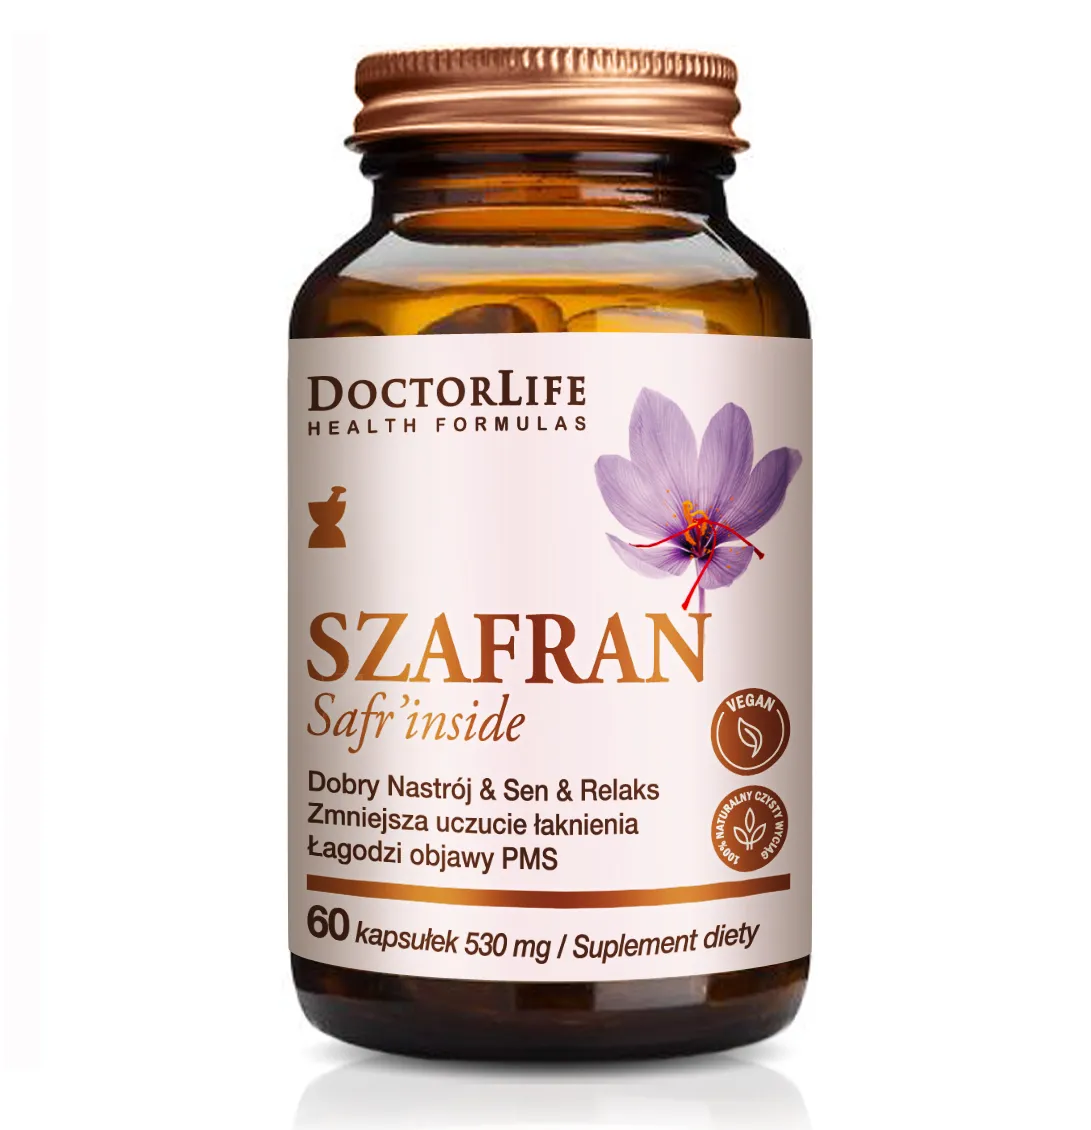 DoctorLife Safr'inside Szafran, 60 kapsułek 